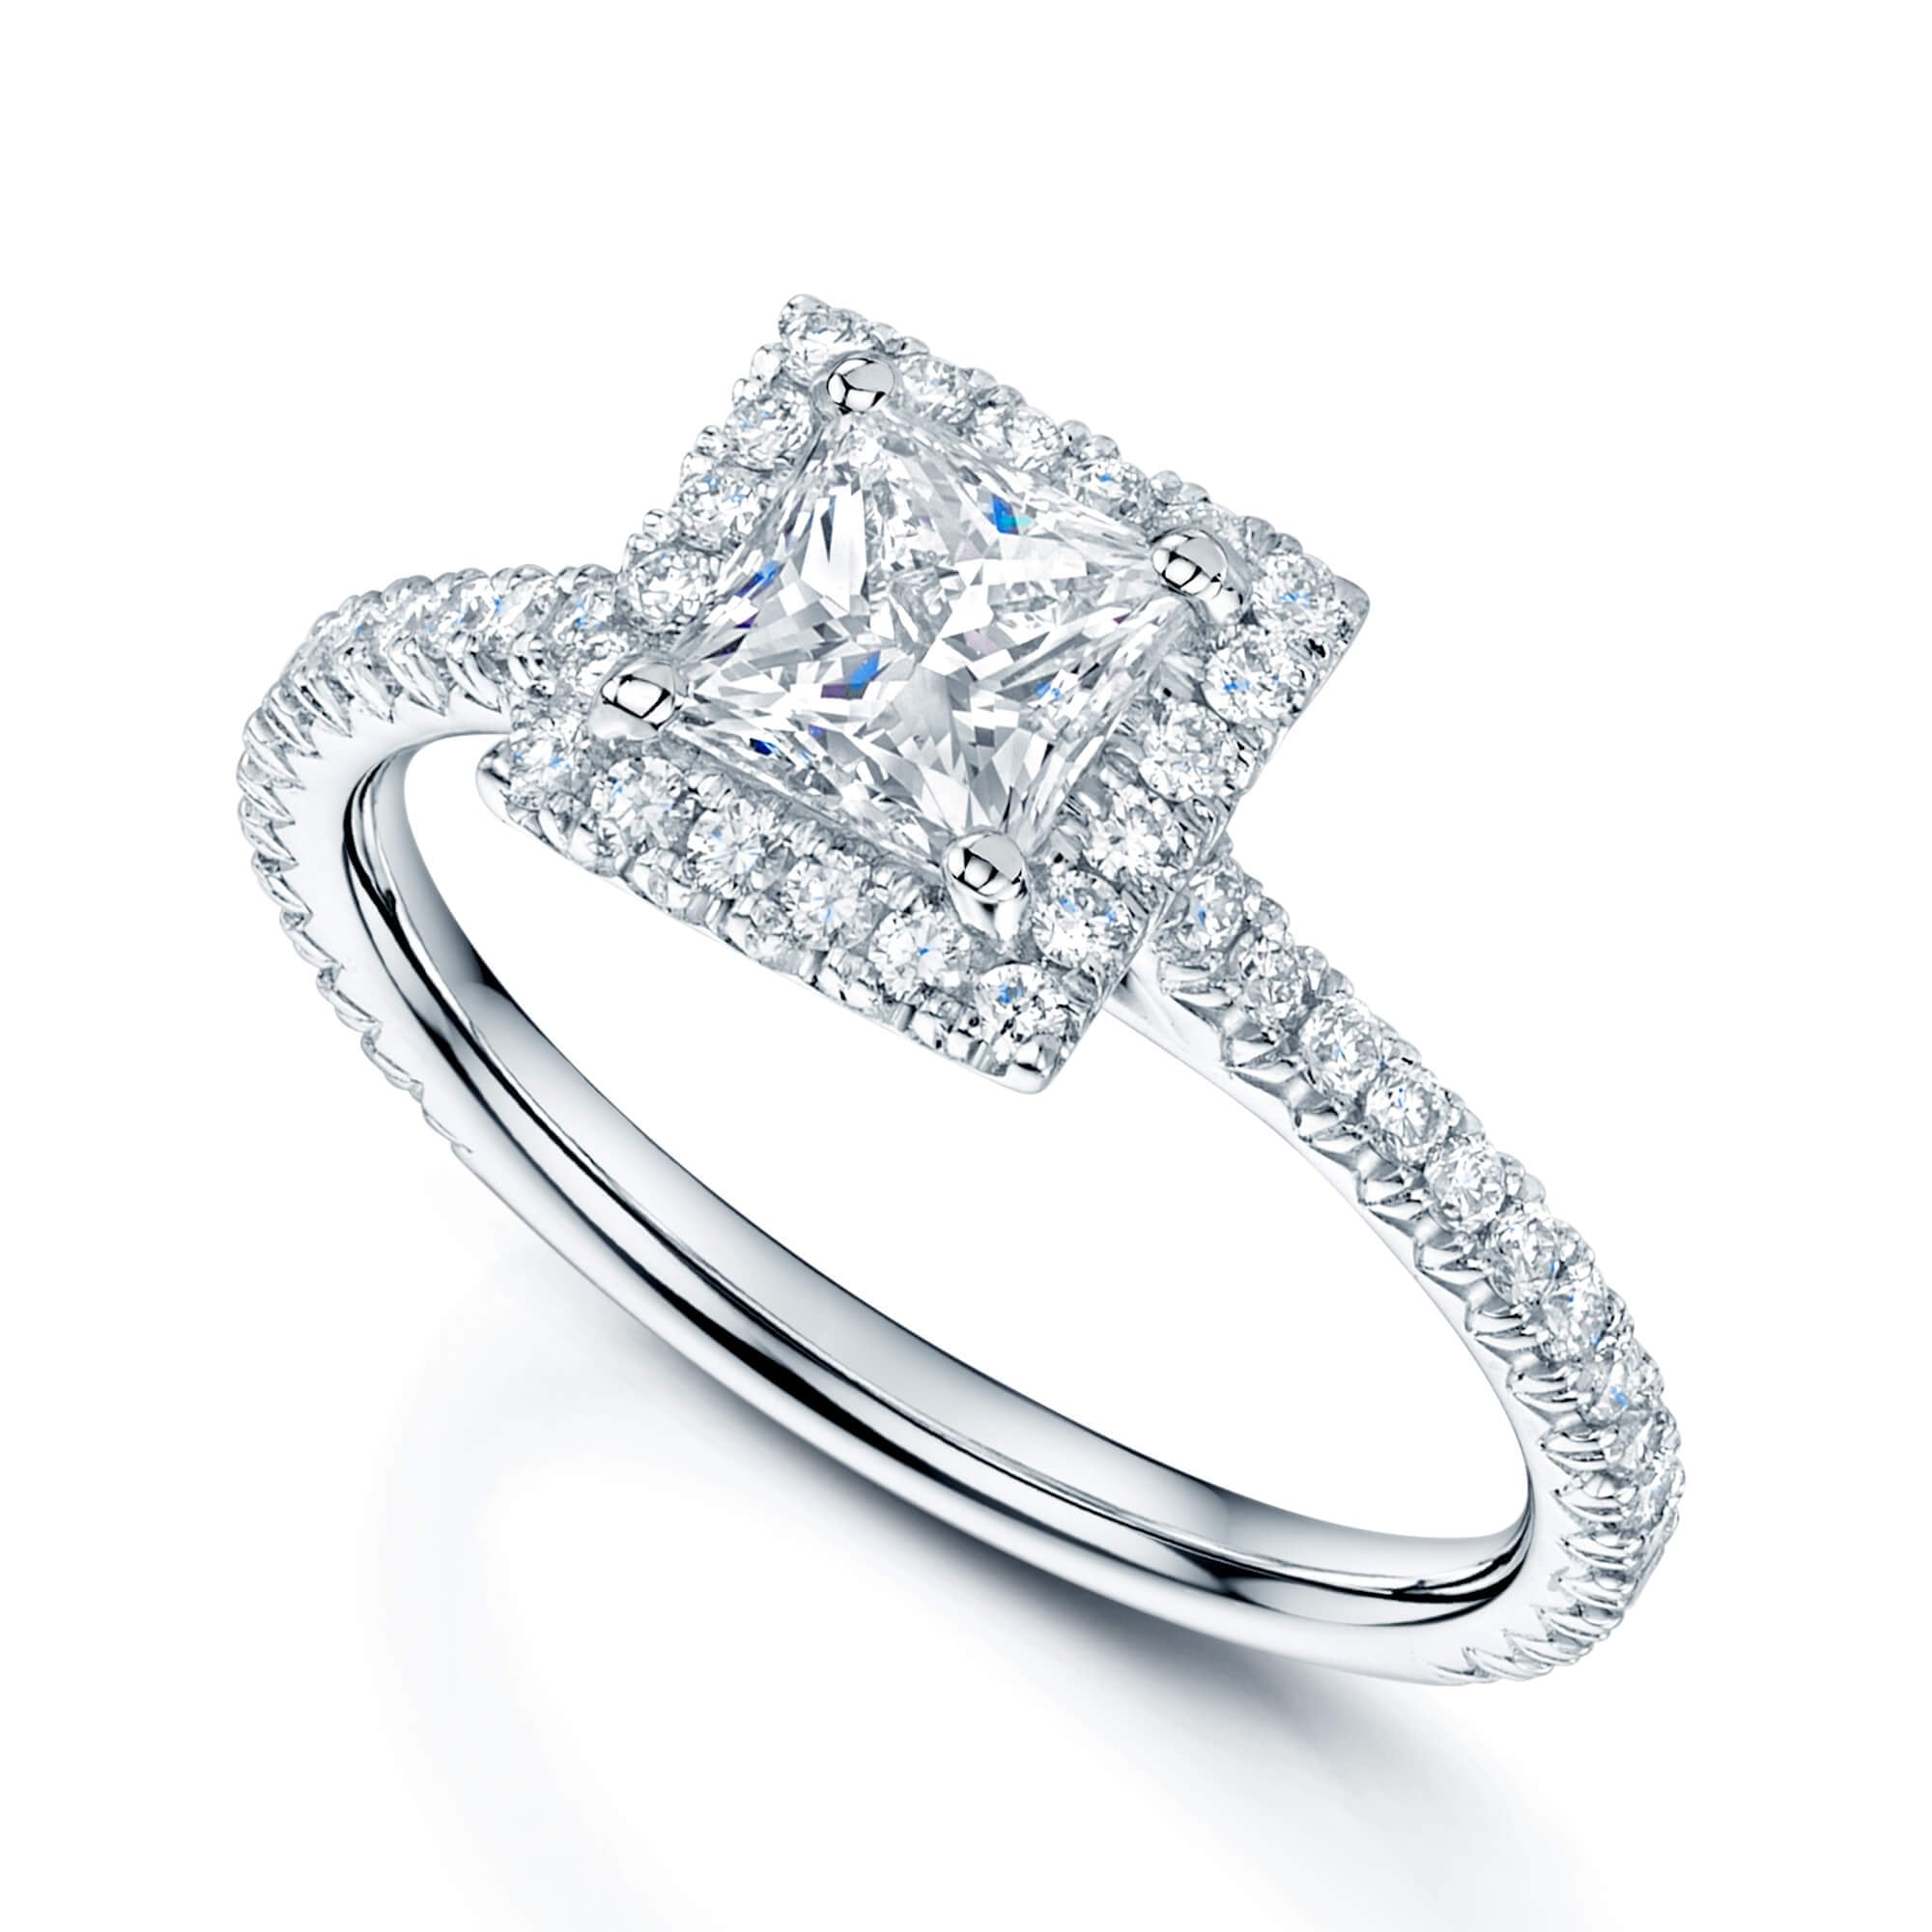 Platinum GIA Certificated Princess Cut Diamond Halo Ring With Round Brilliant Cut Diamond Shoulders